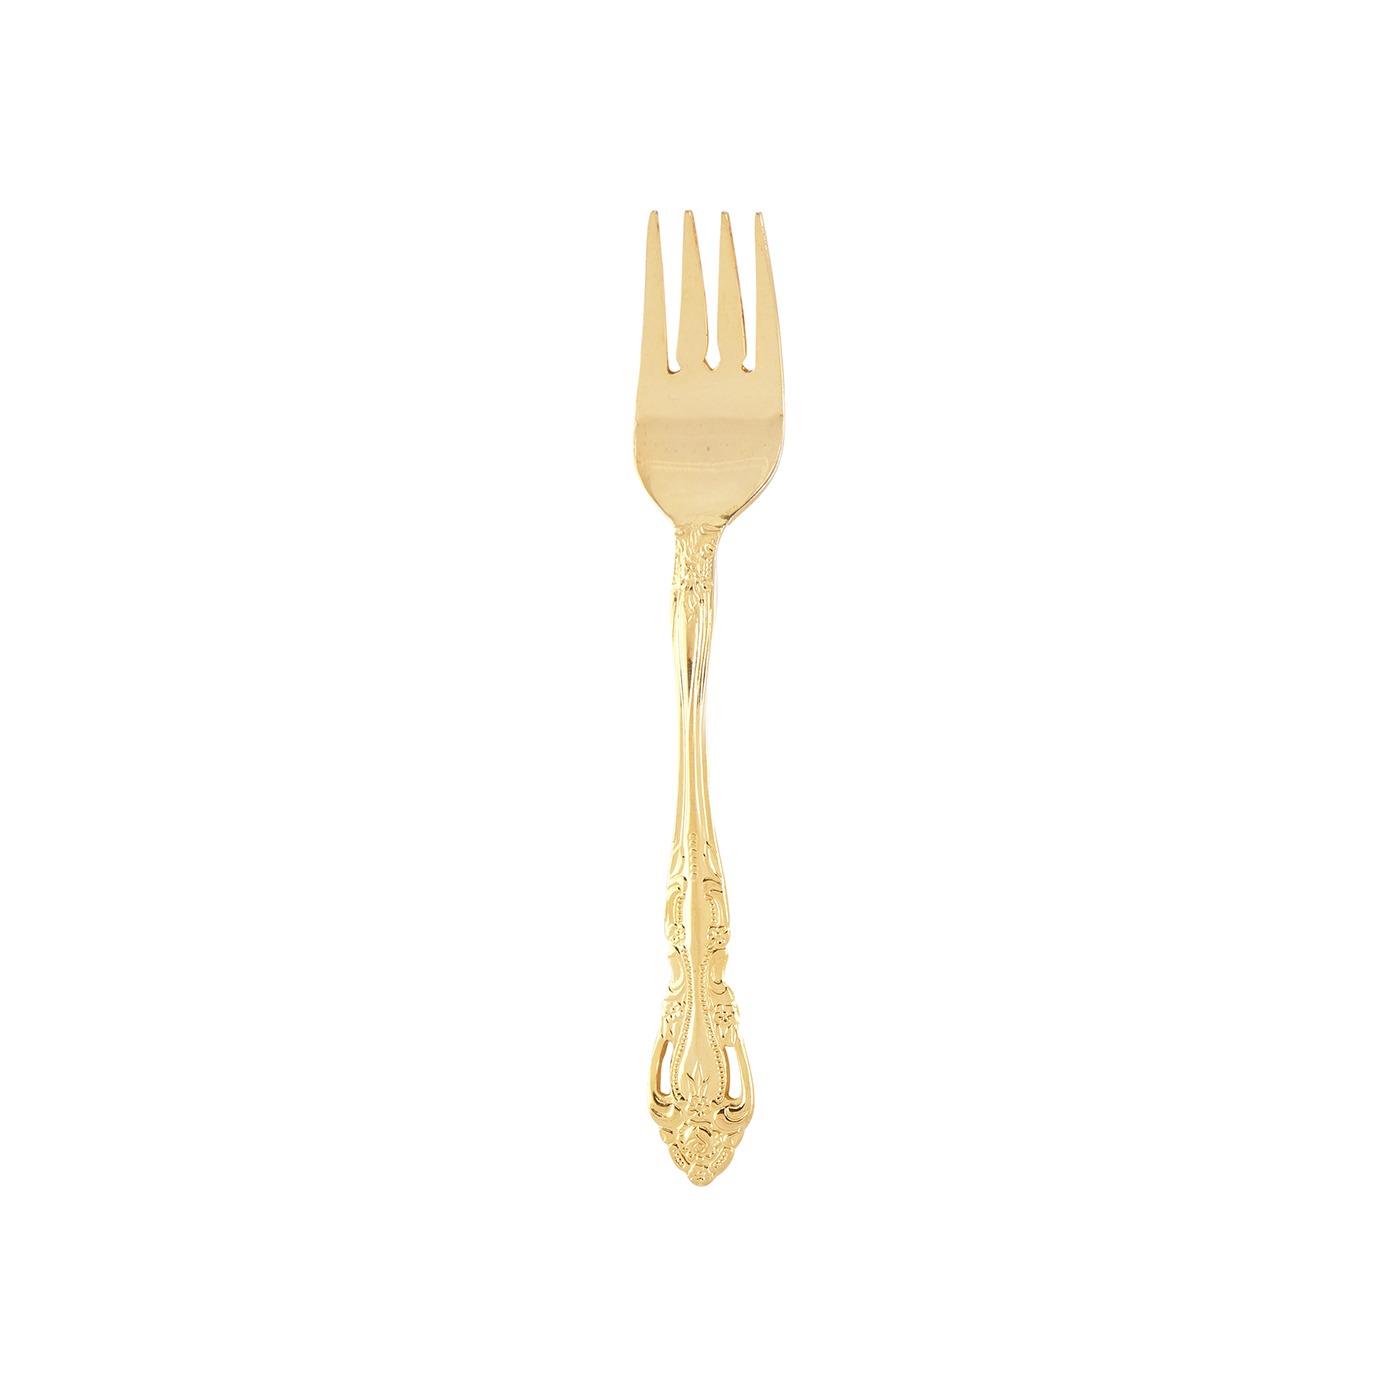 Abbey Gold - Salad Fork